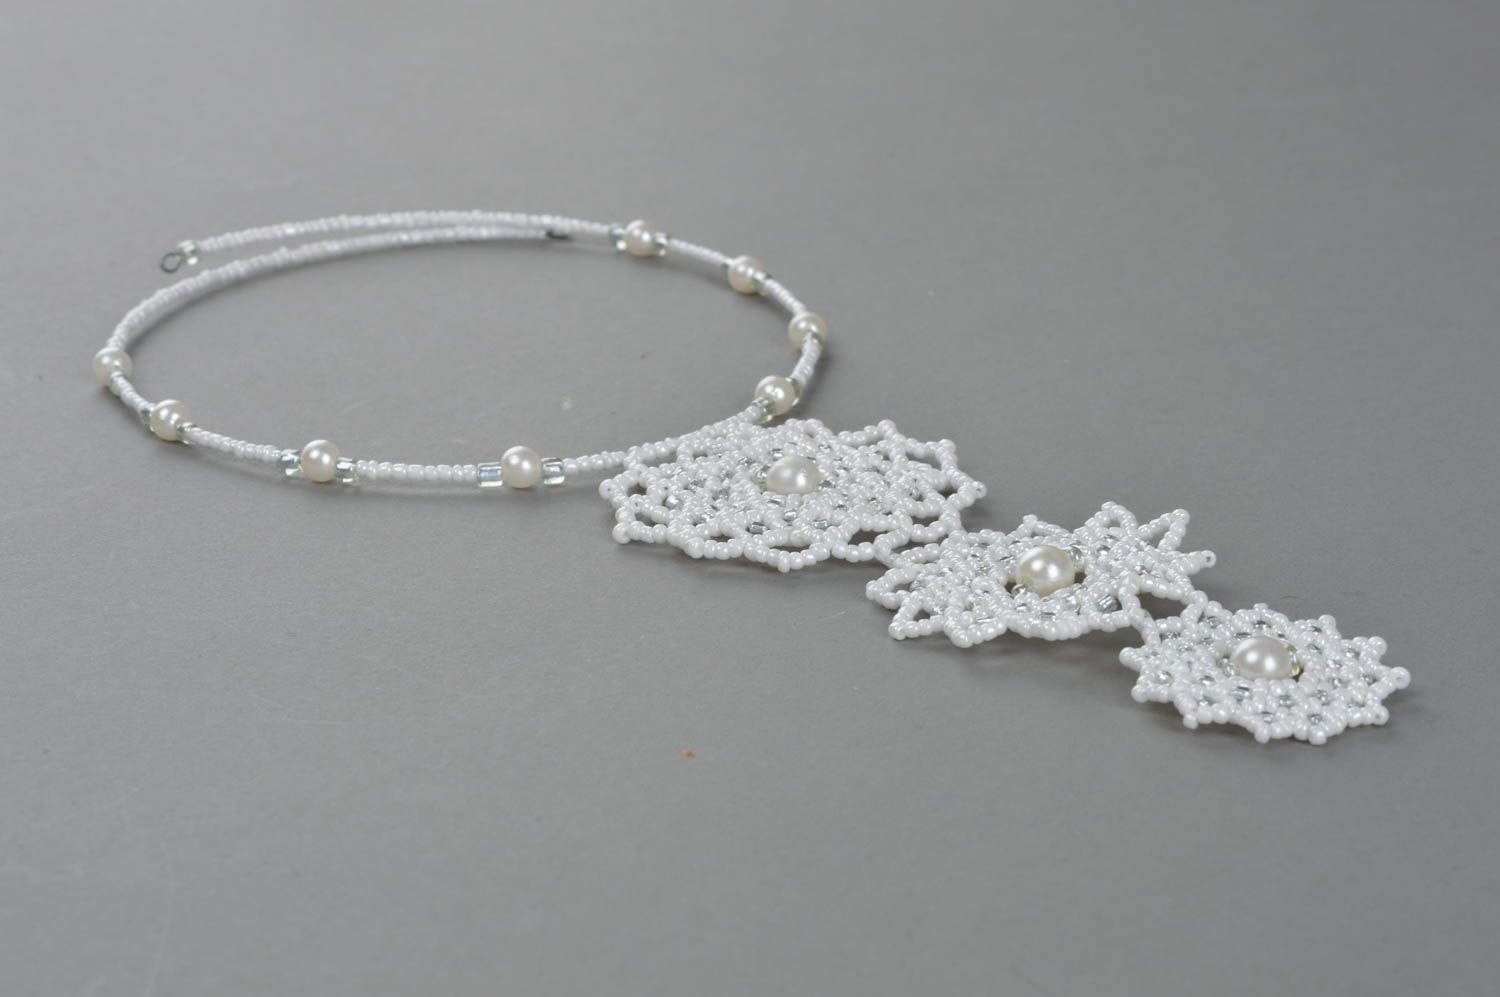 Handmade beaded pendant seed beads jewelry designer accessory for girls photo 4